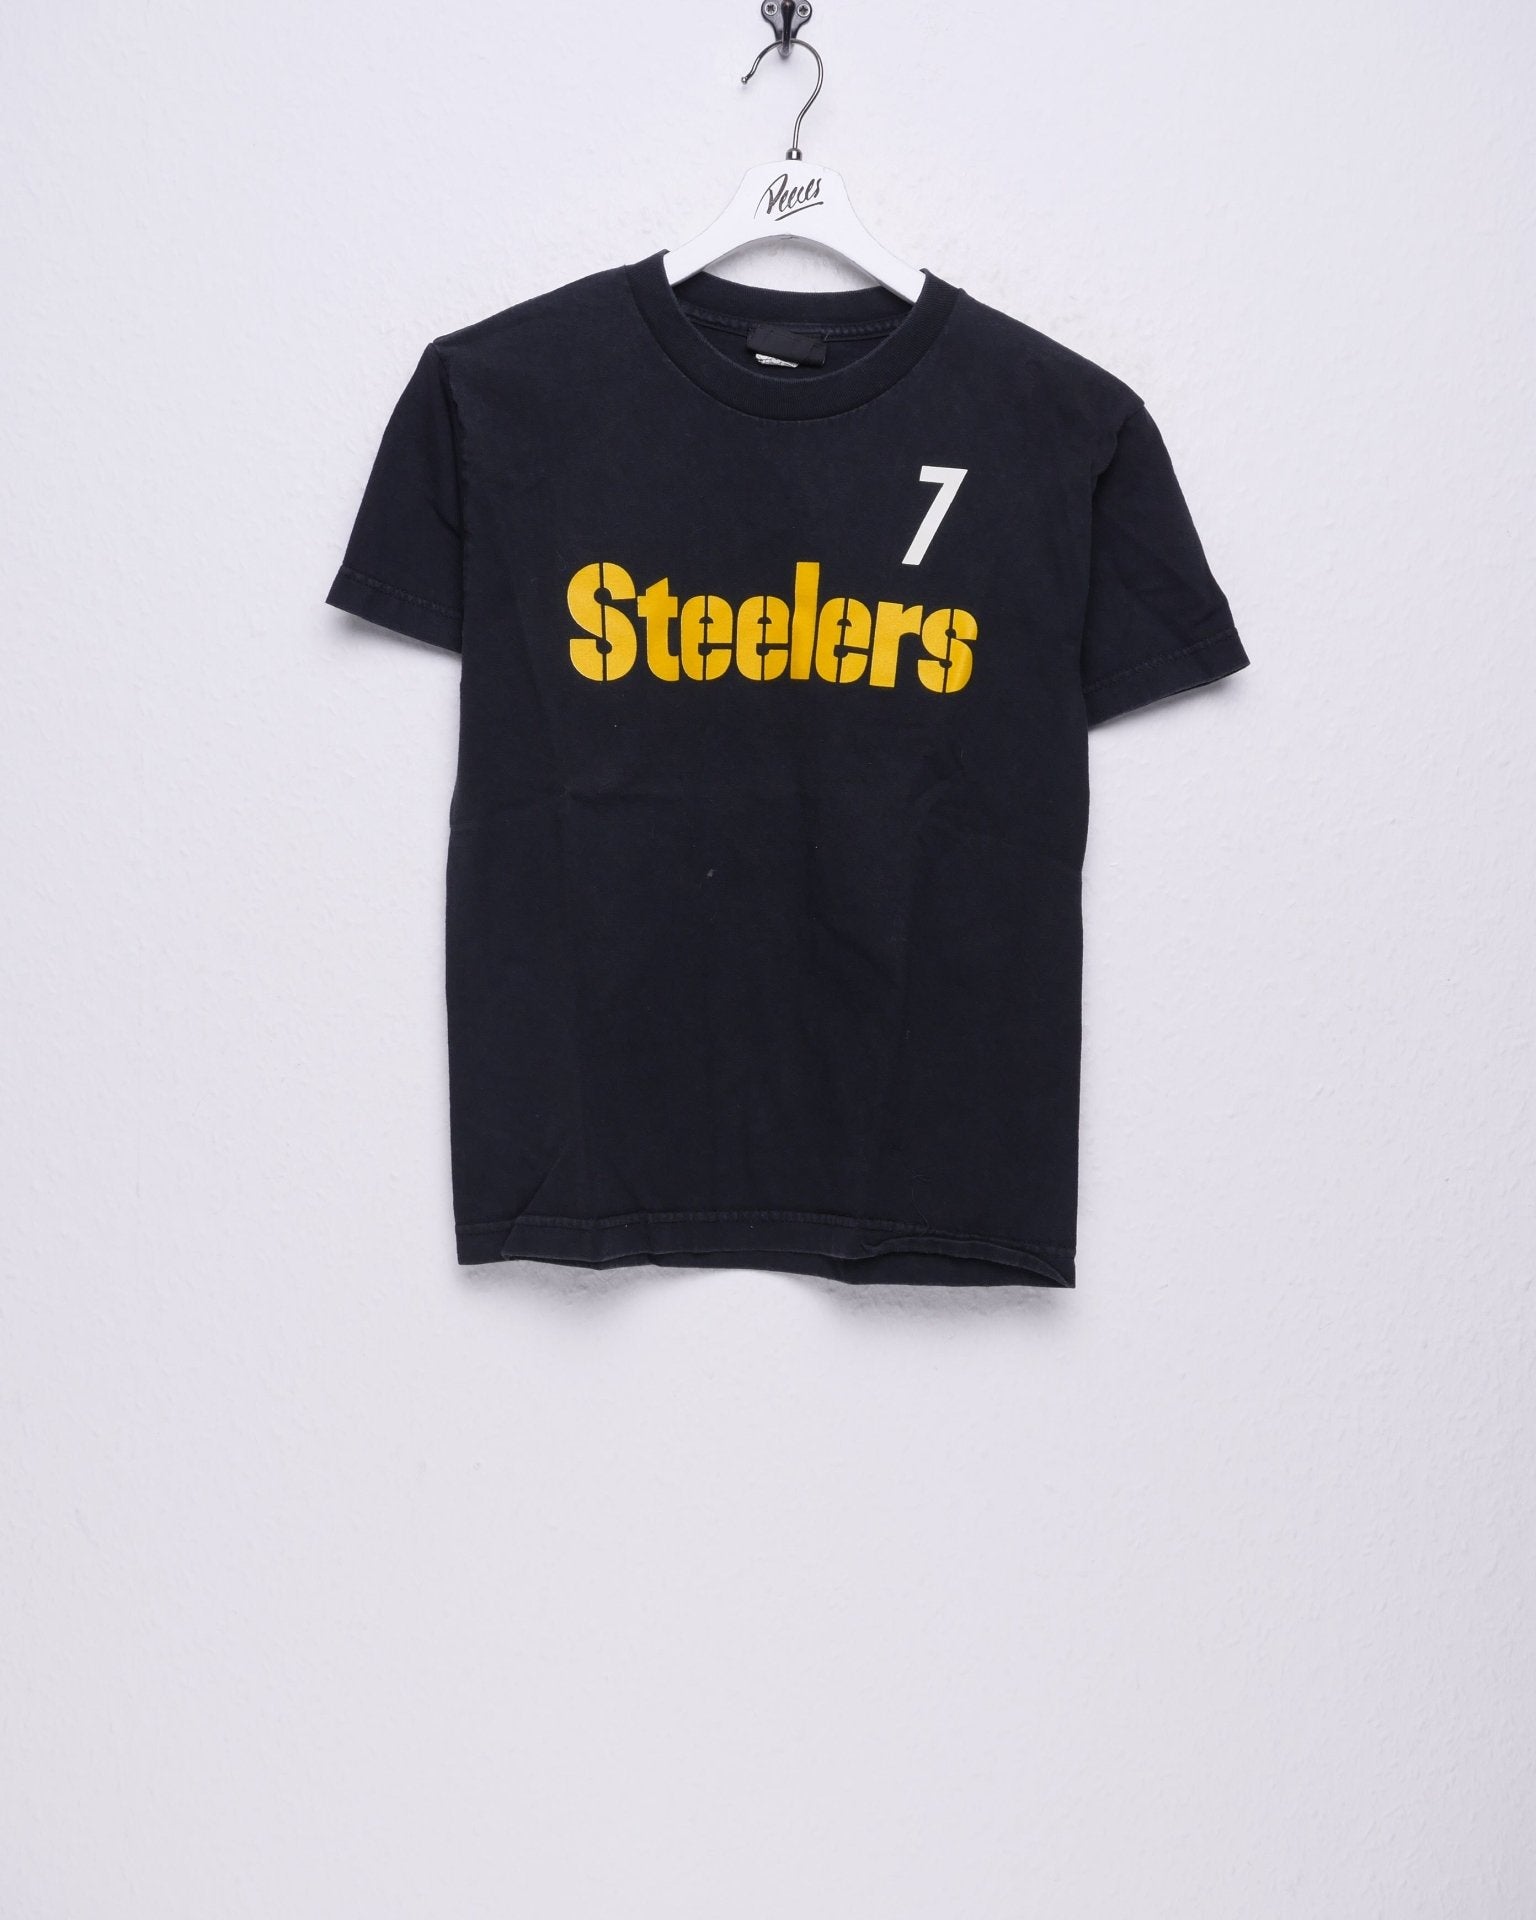 Reebok printed Steelers Spellout black Shirt - Peeces